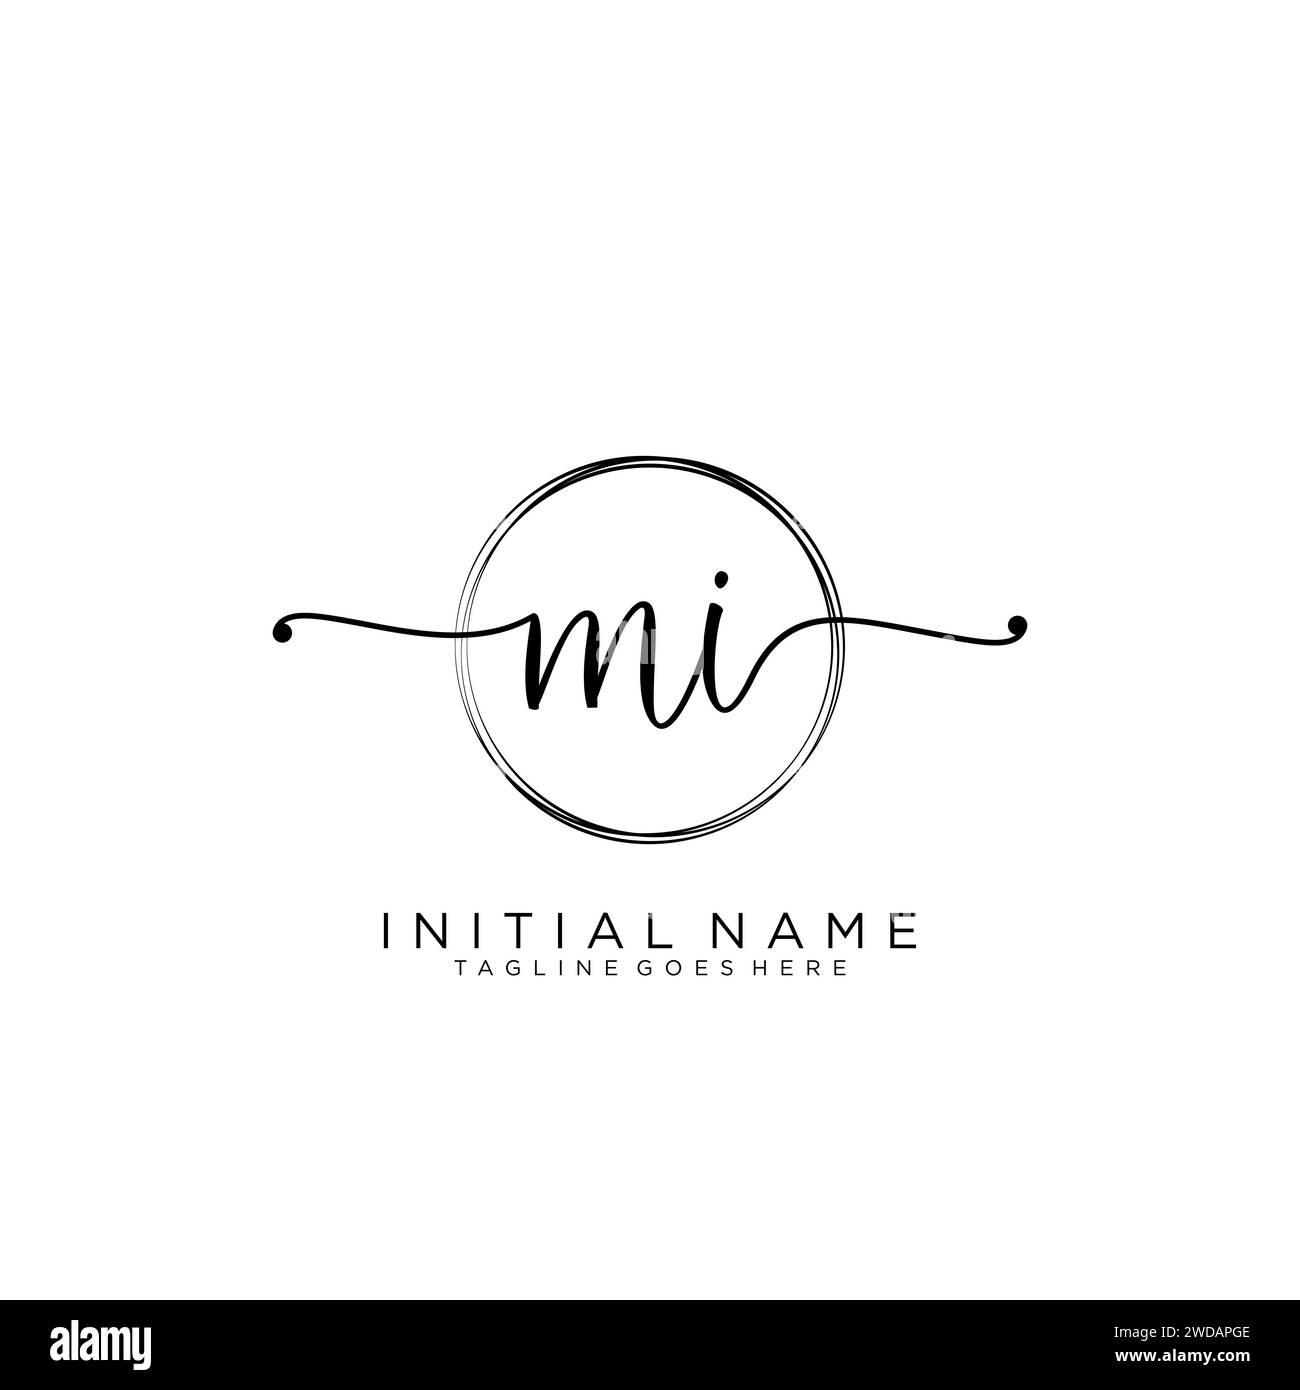 MI Initial handwriting logo with circle Stock Vector